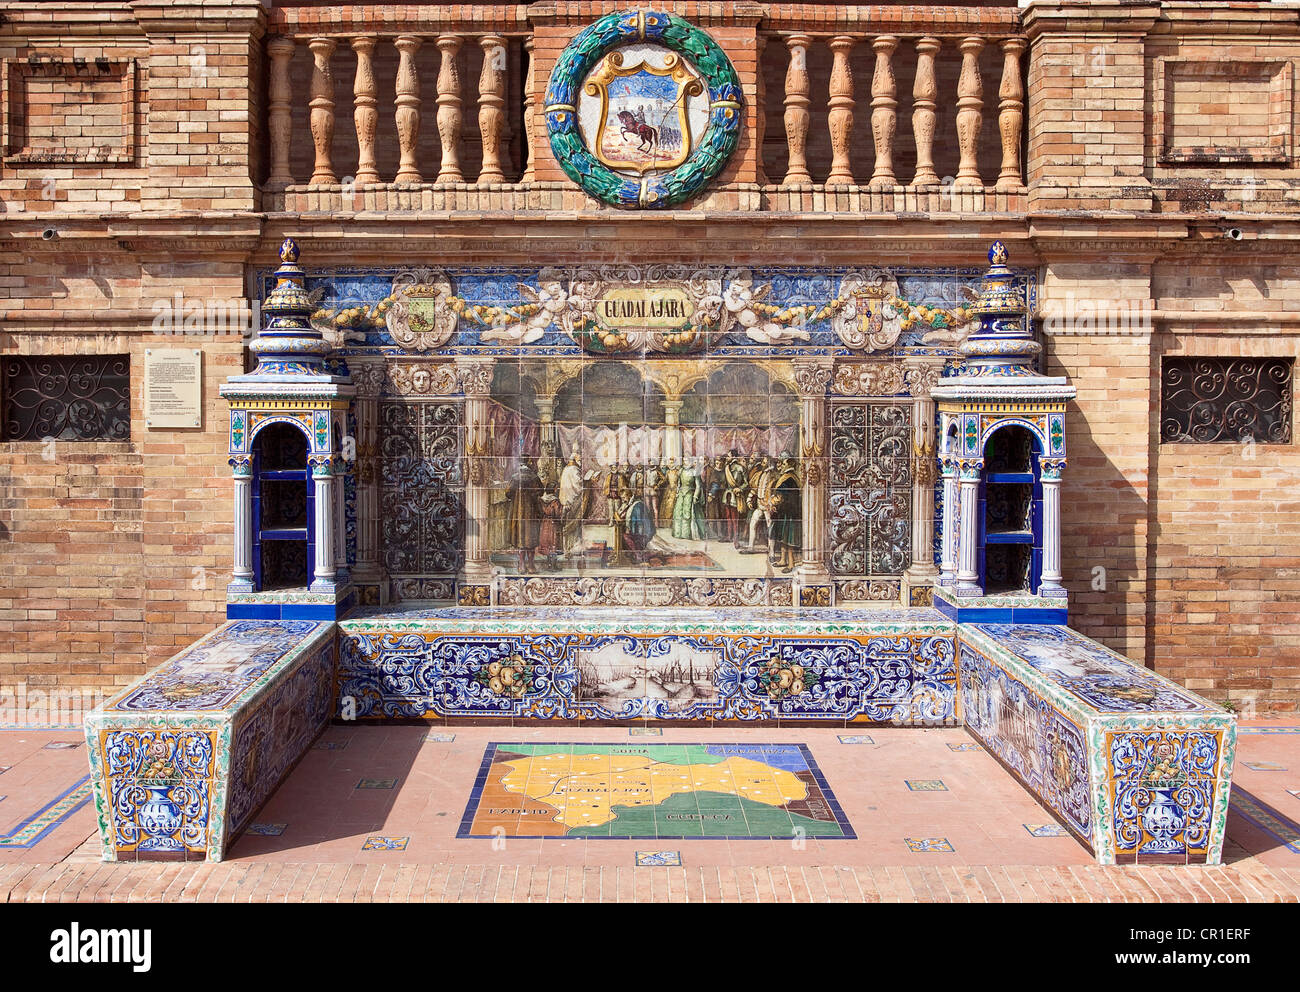 Tile mosaic of a Spanish province, Plaza de España, Seville, Spain, Europe Stock Photo